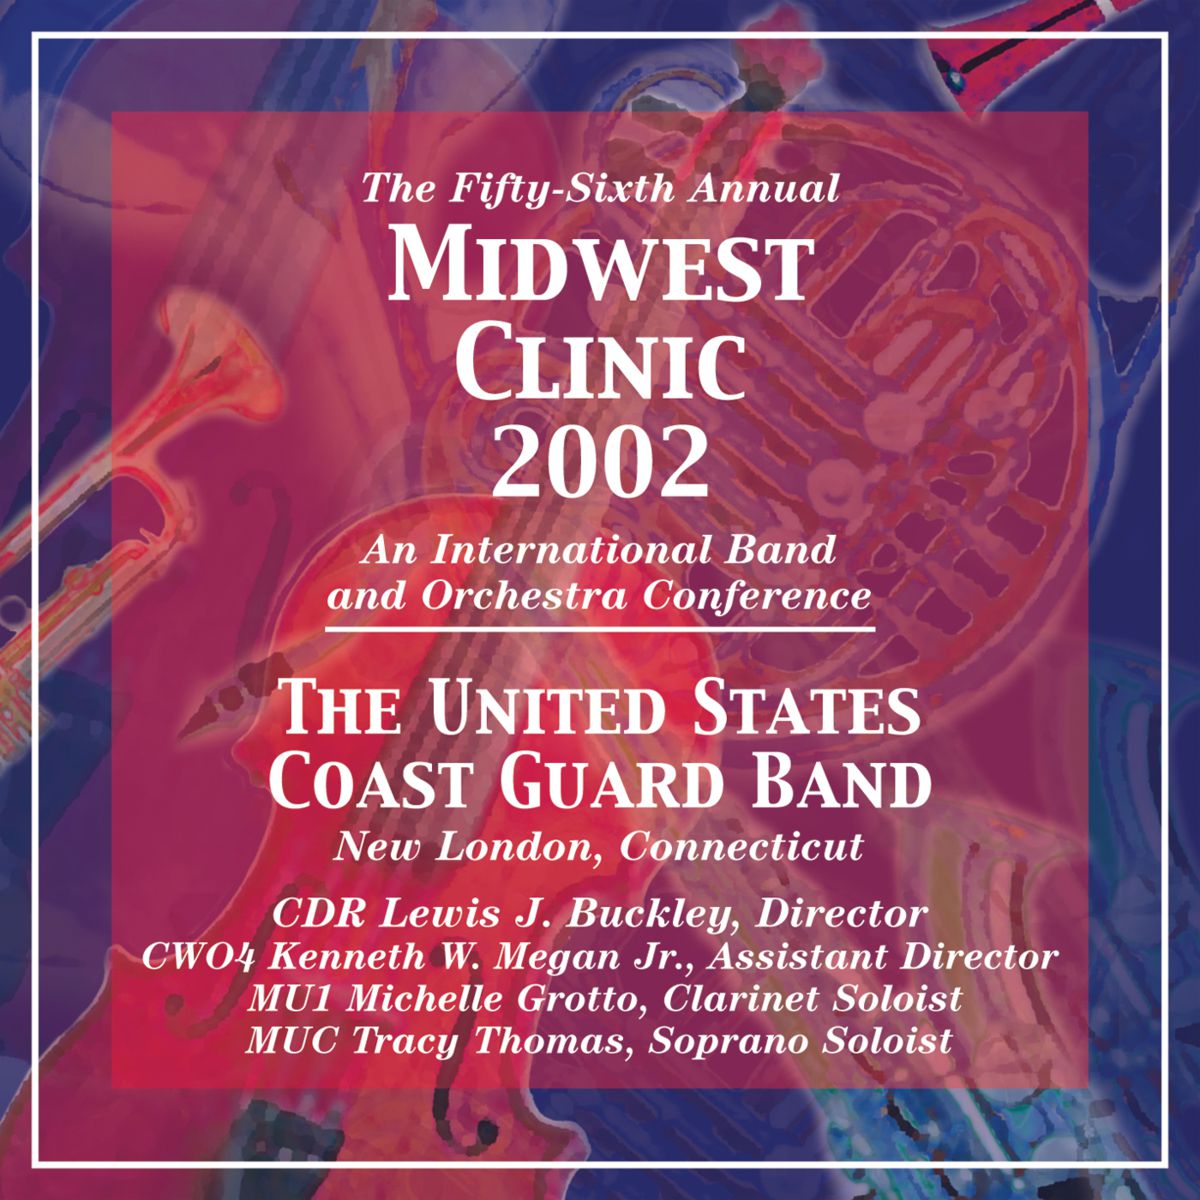 2002 Midwest Clinic: The United States Coast Guard Band - hacer clic aqu